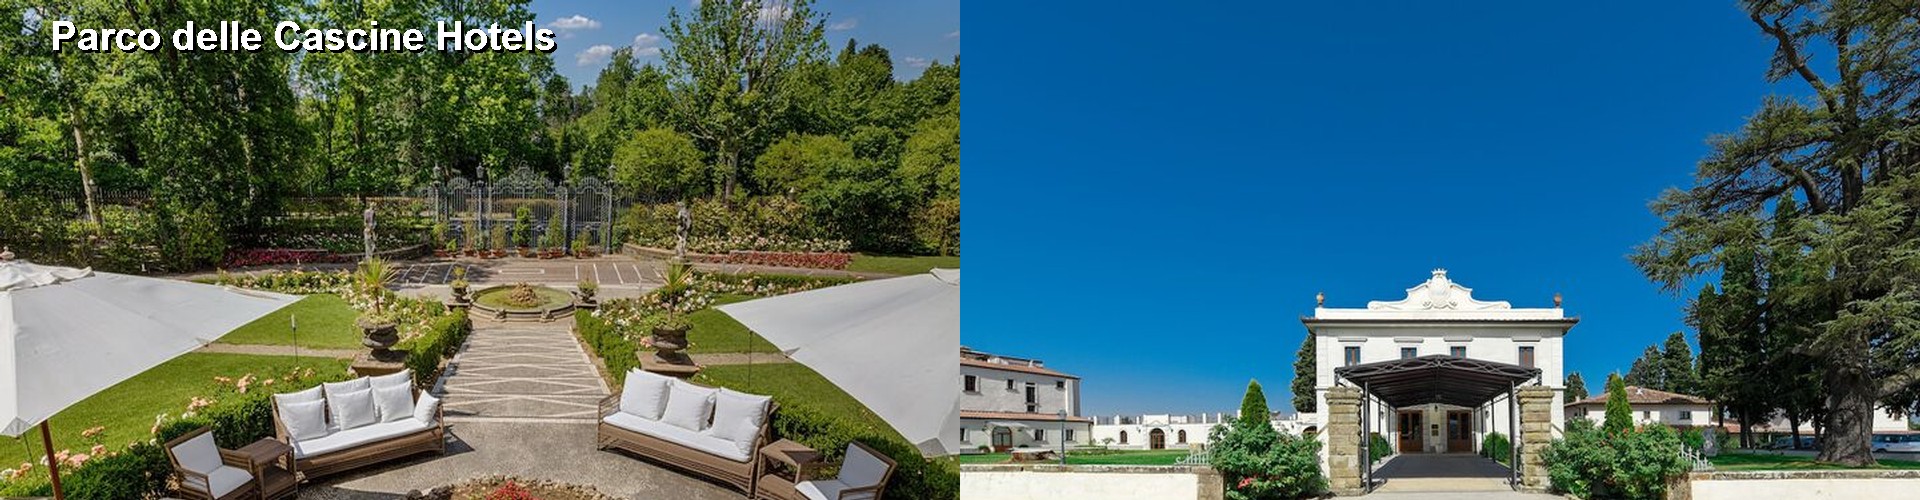 5 Best Hotels near Parco delle Cascine